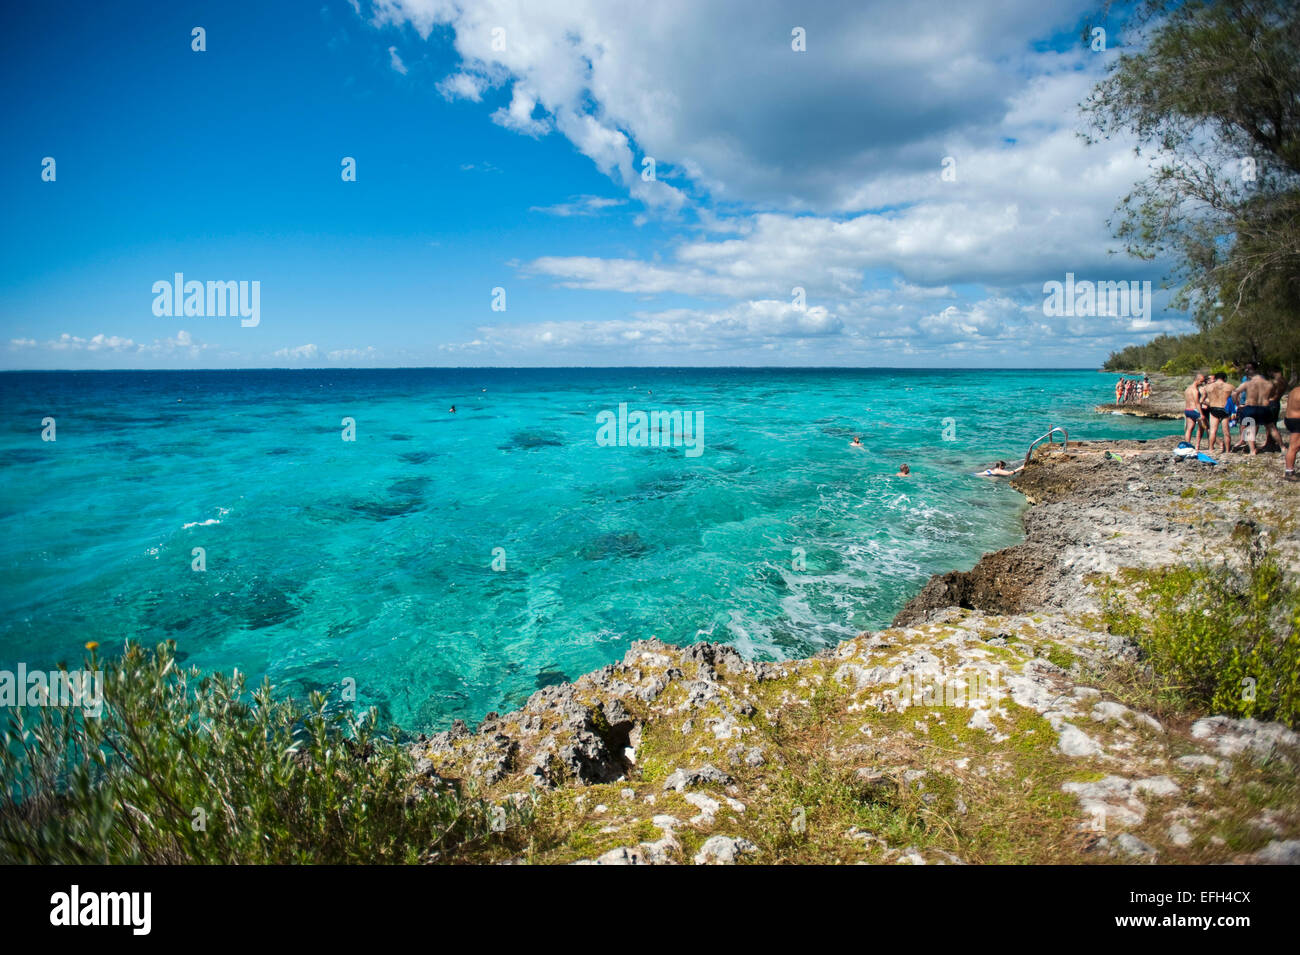 Horizontal view of tourists enjoying the beautiful clear Caribbean sea at Punta Perdiz in Cuba. Stock Photo